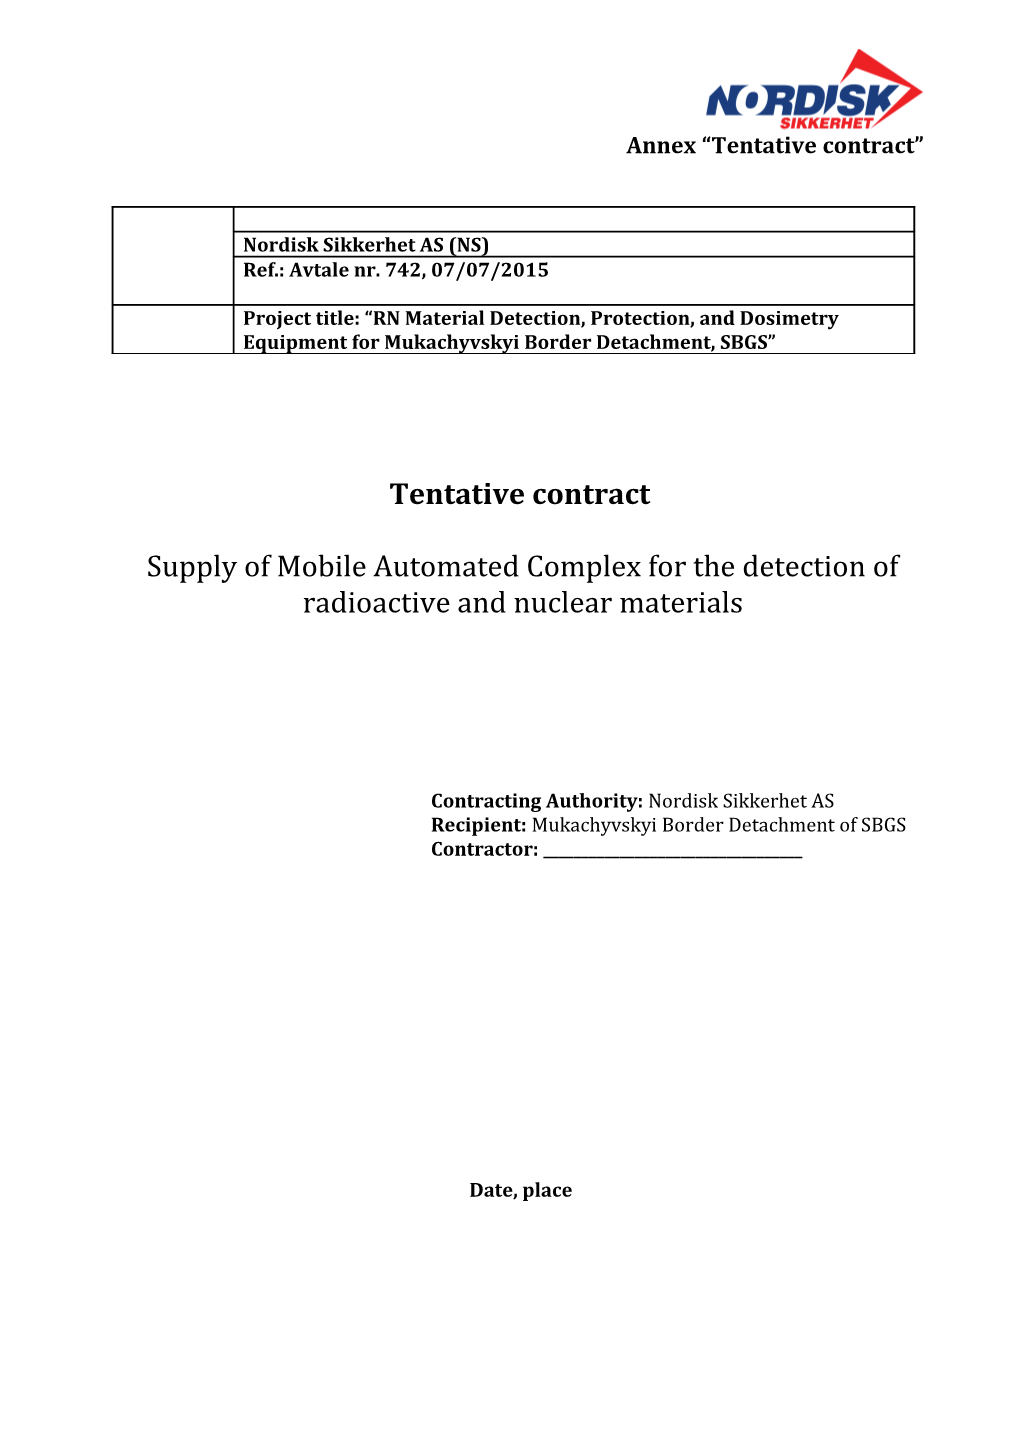 Annex Tentative Contract Form